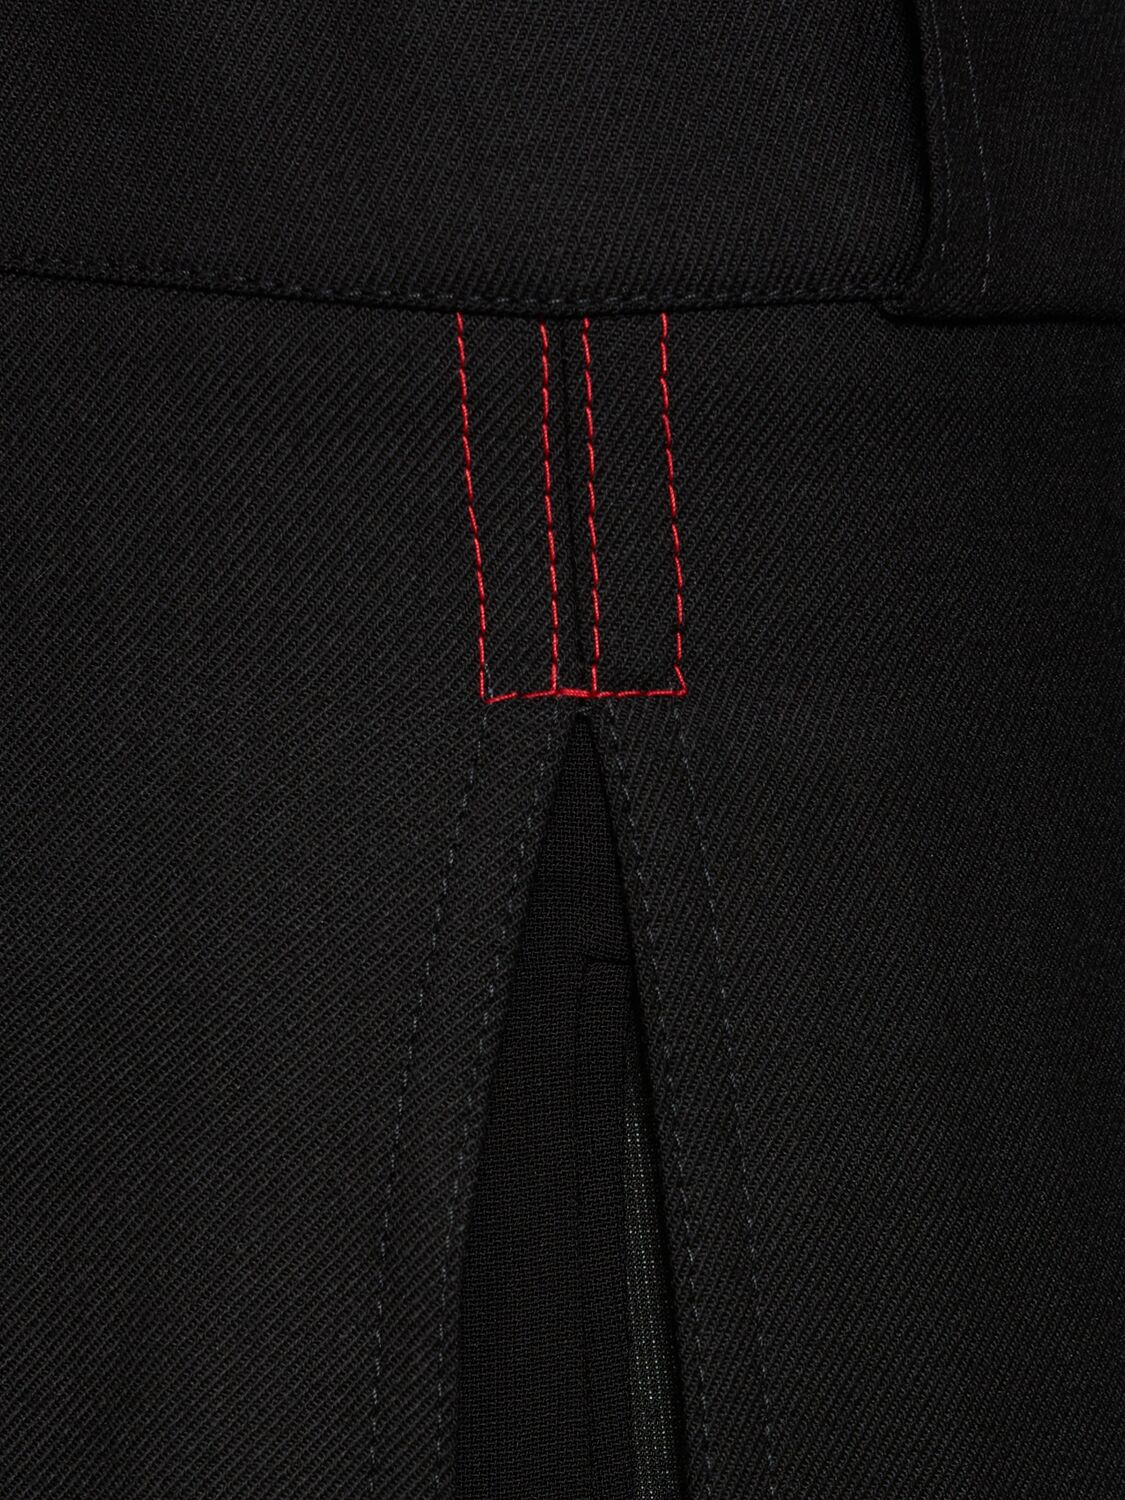 Shop Victoria Beckham Tailored Wool Blend Maxi Skirt In Black